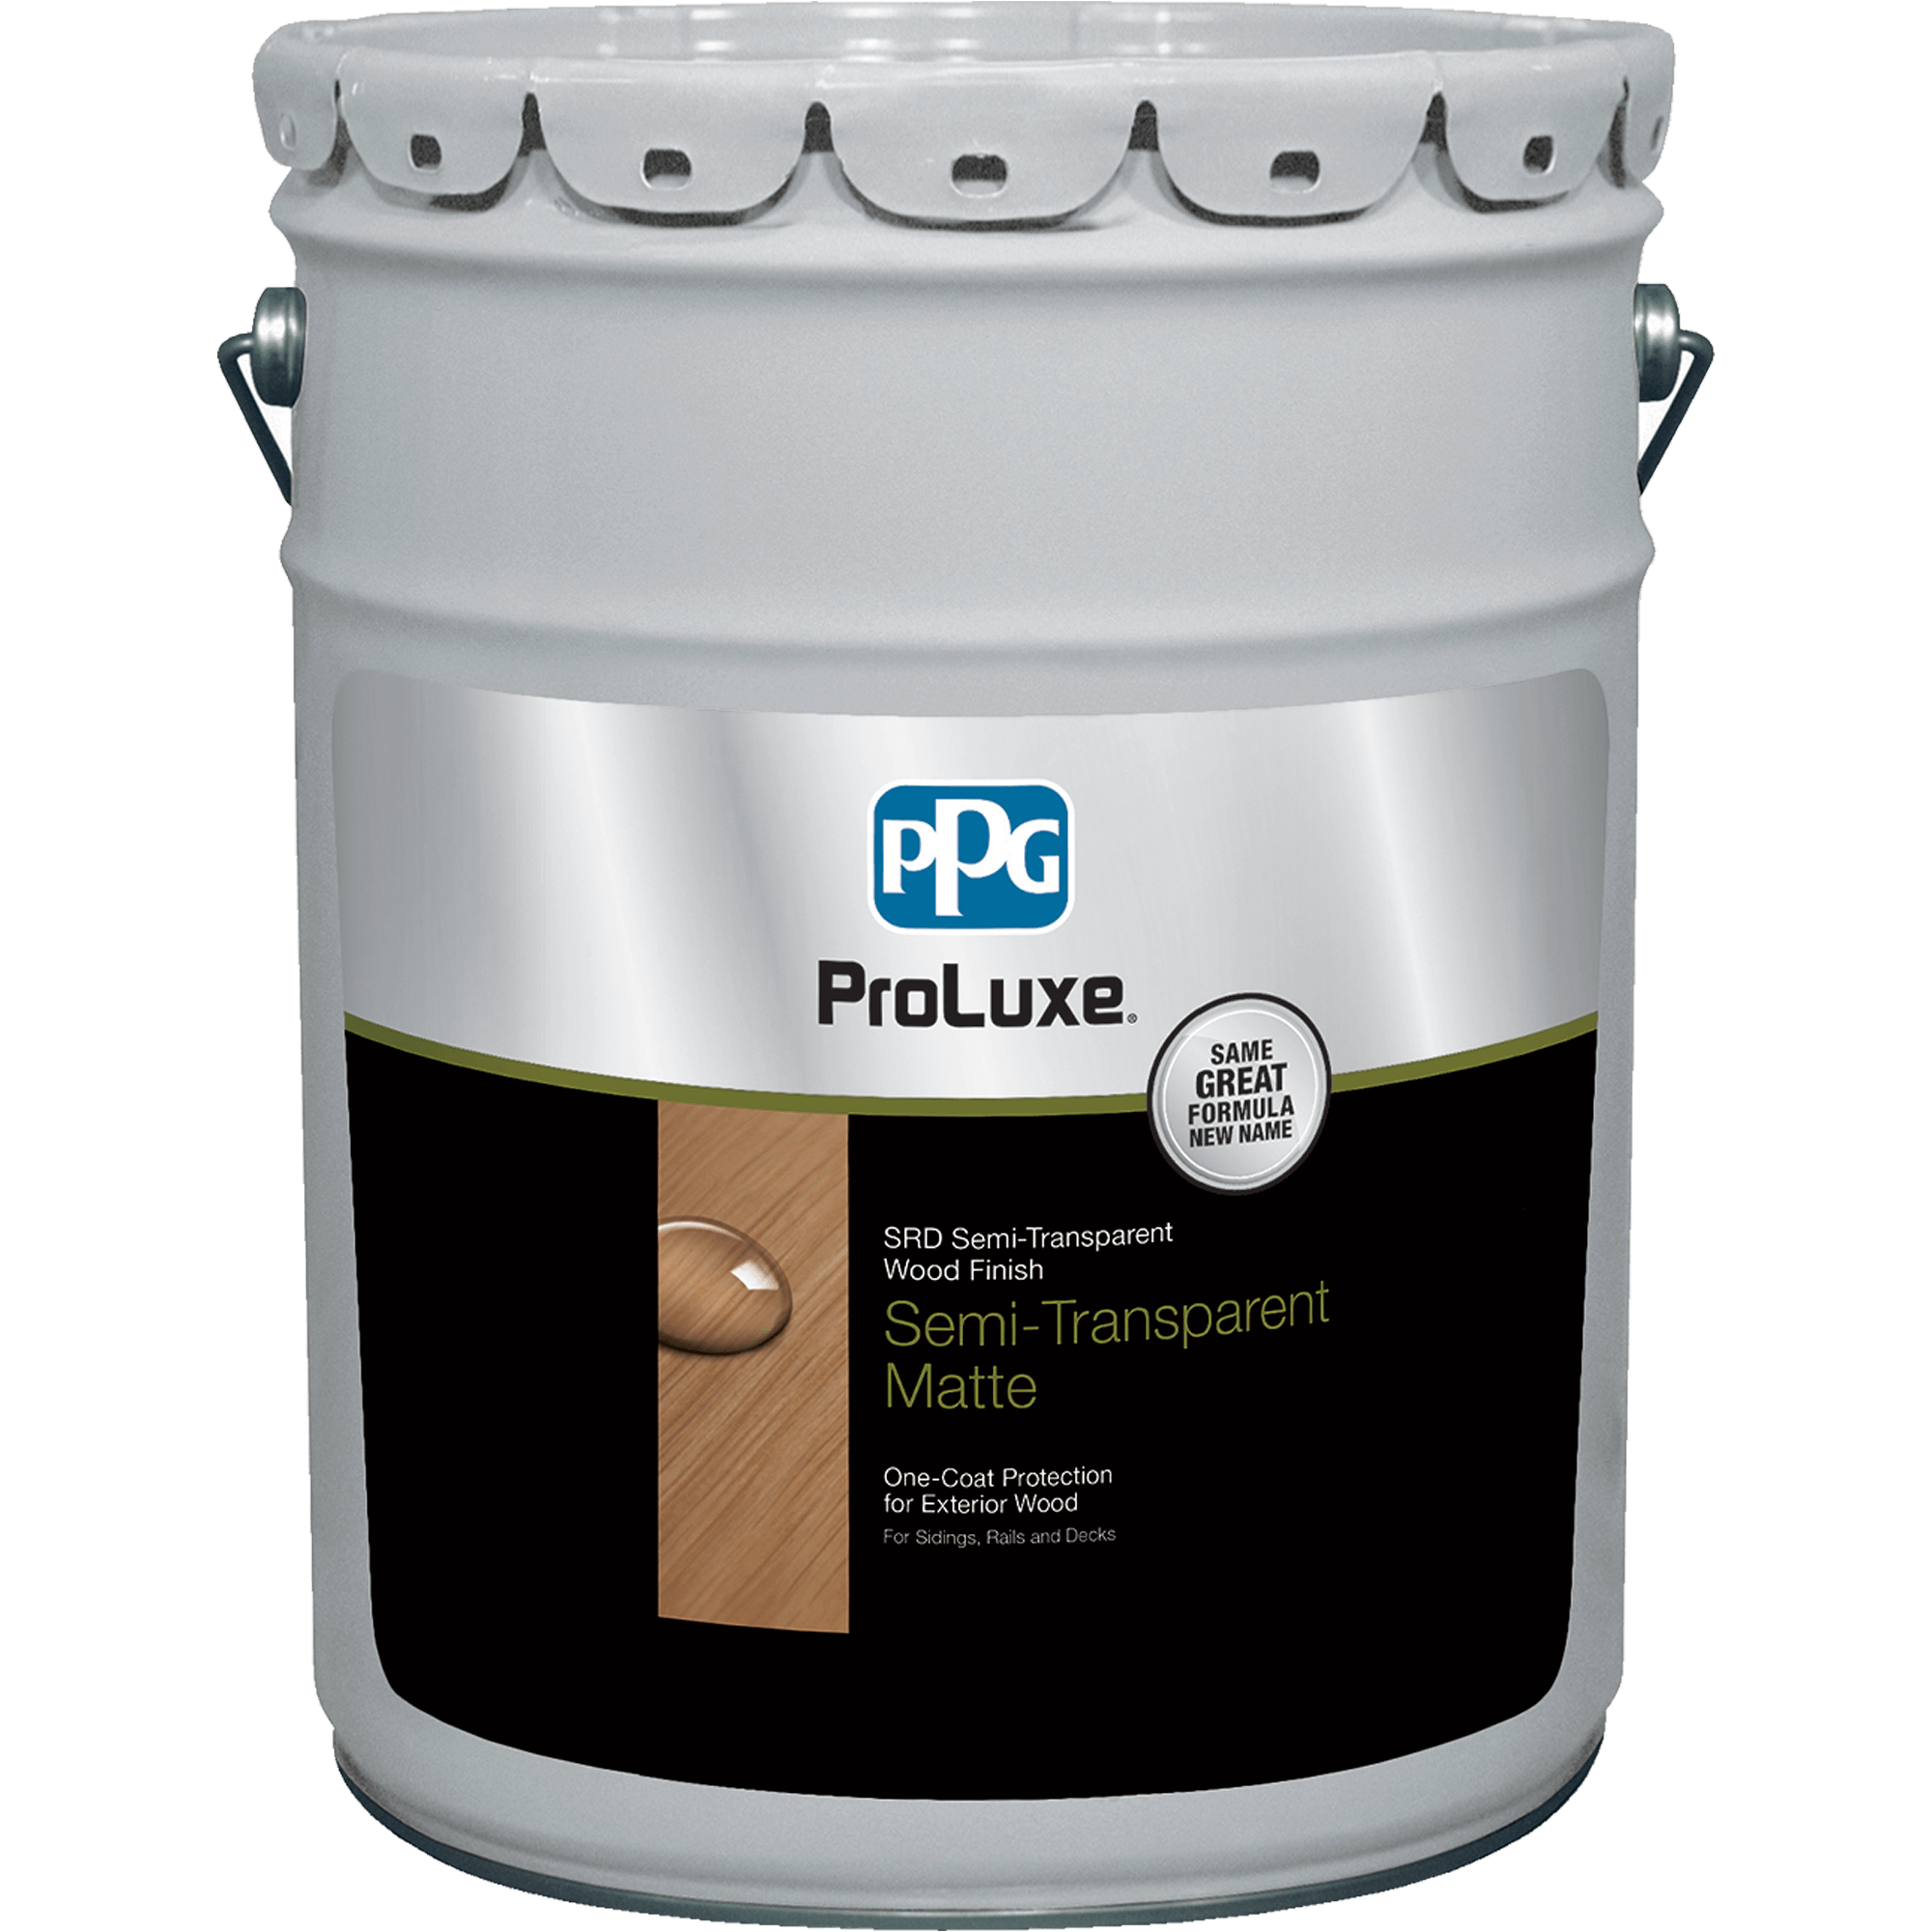 PROLUXE<sup>®</sup> SRD Semi-Transparent Wood Finish 5 gallon